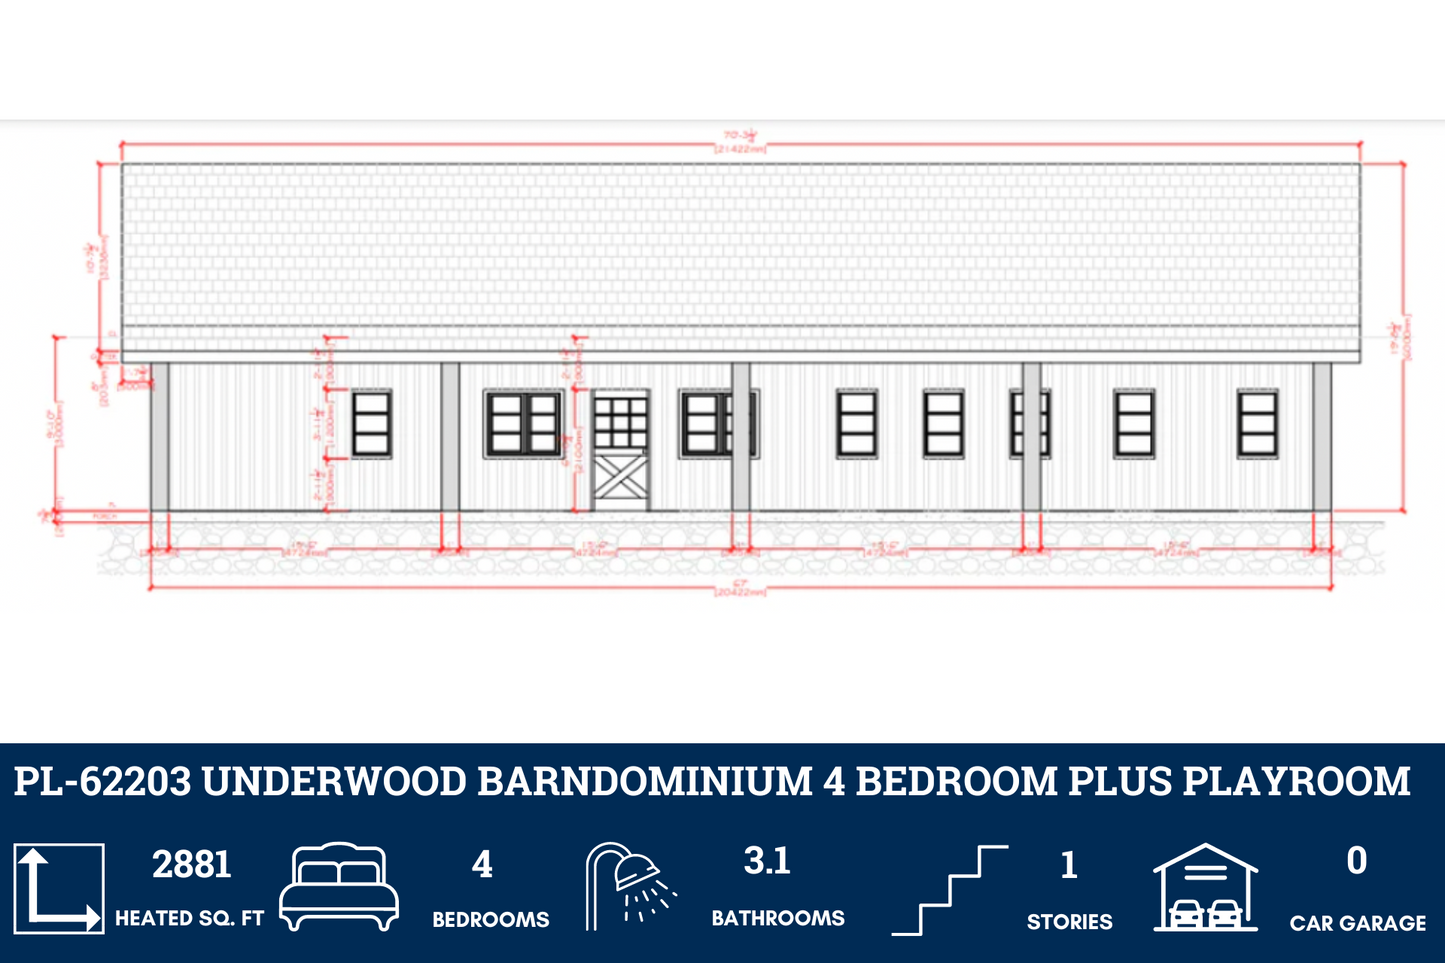 PL-62203 Underwood Barndominium House Plans